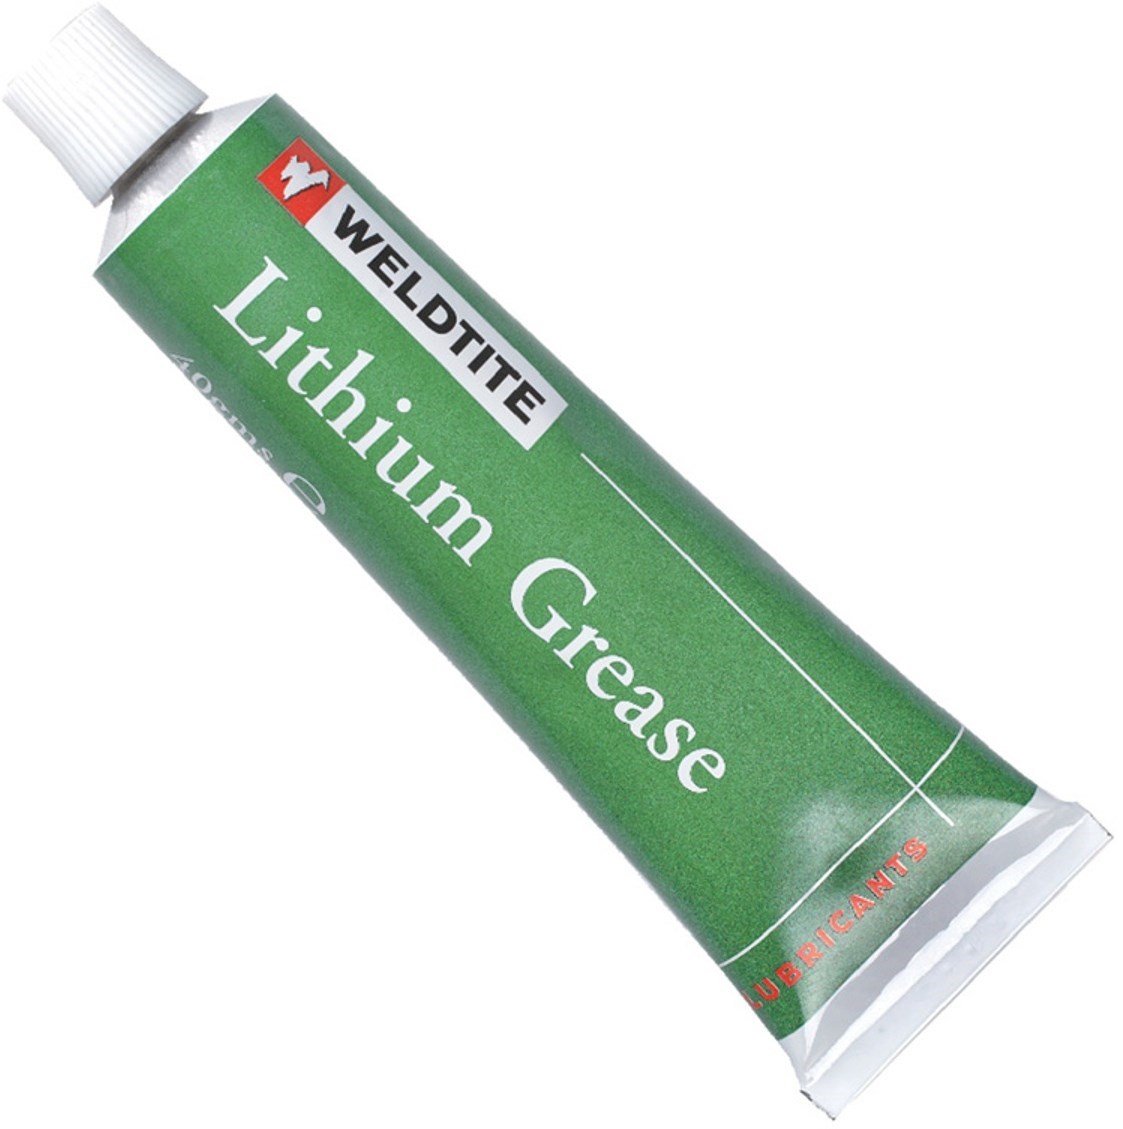 Weldtite Grease Tube 40g product image